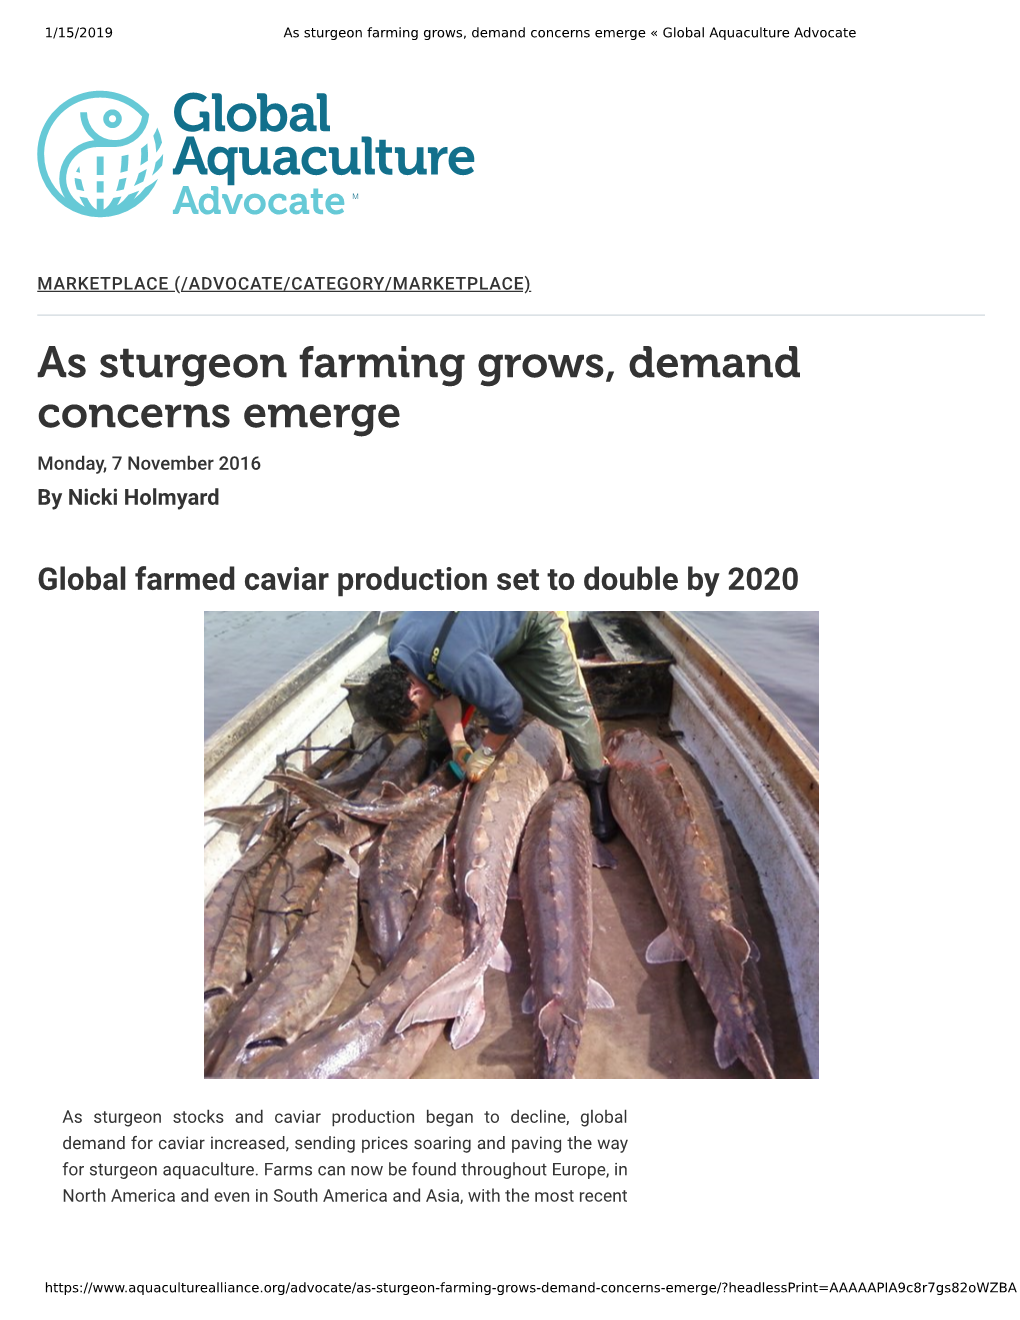 As Sturgeon Farming Grows, Demand Concerns Emerge « Global Aquaculture Advocate